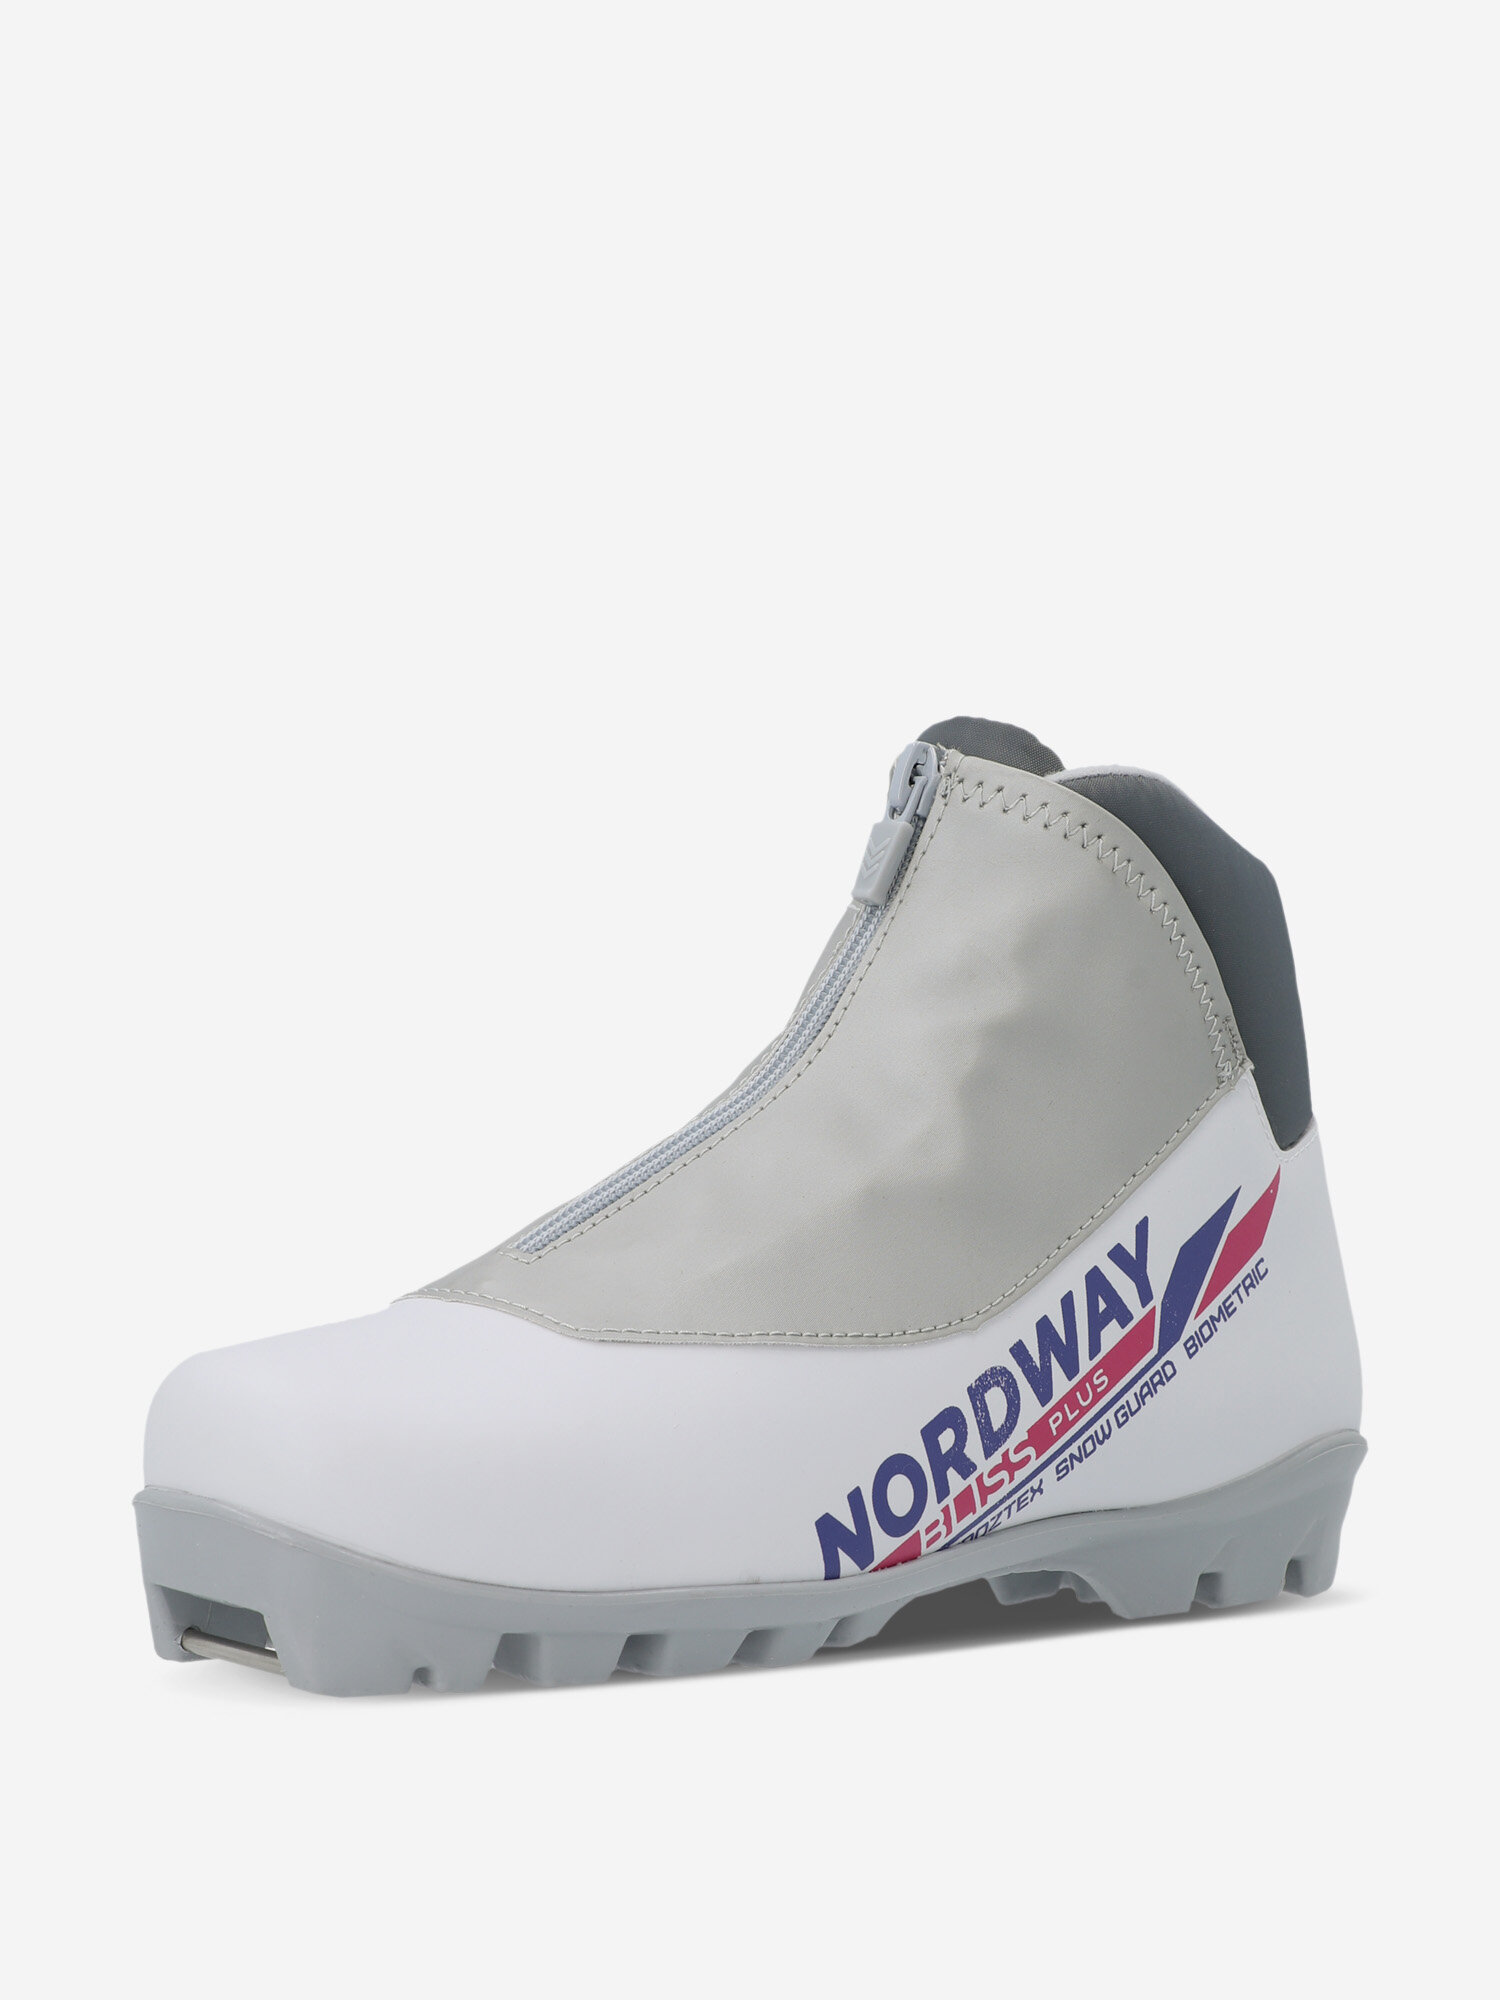 Ботинки для беговых лыж женские Nordway Bliss Plus NNN Белый; RUS: 41, Ориг: 42